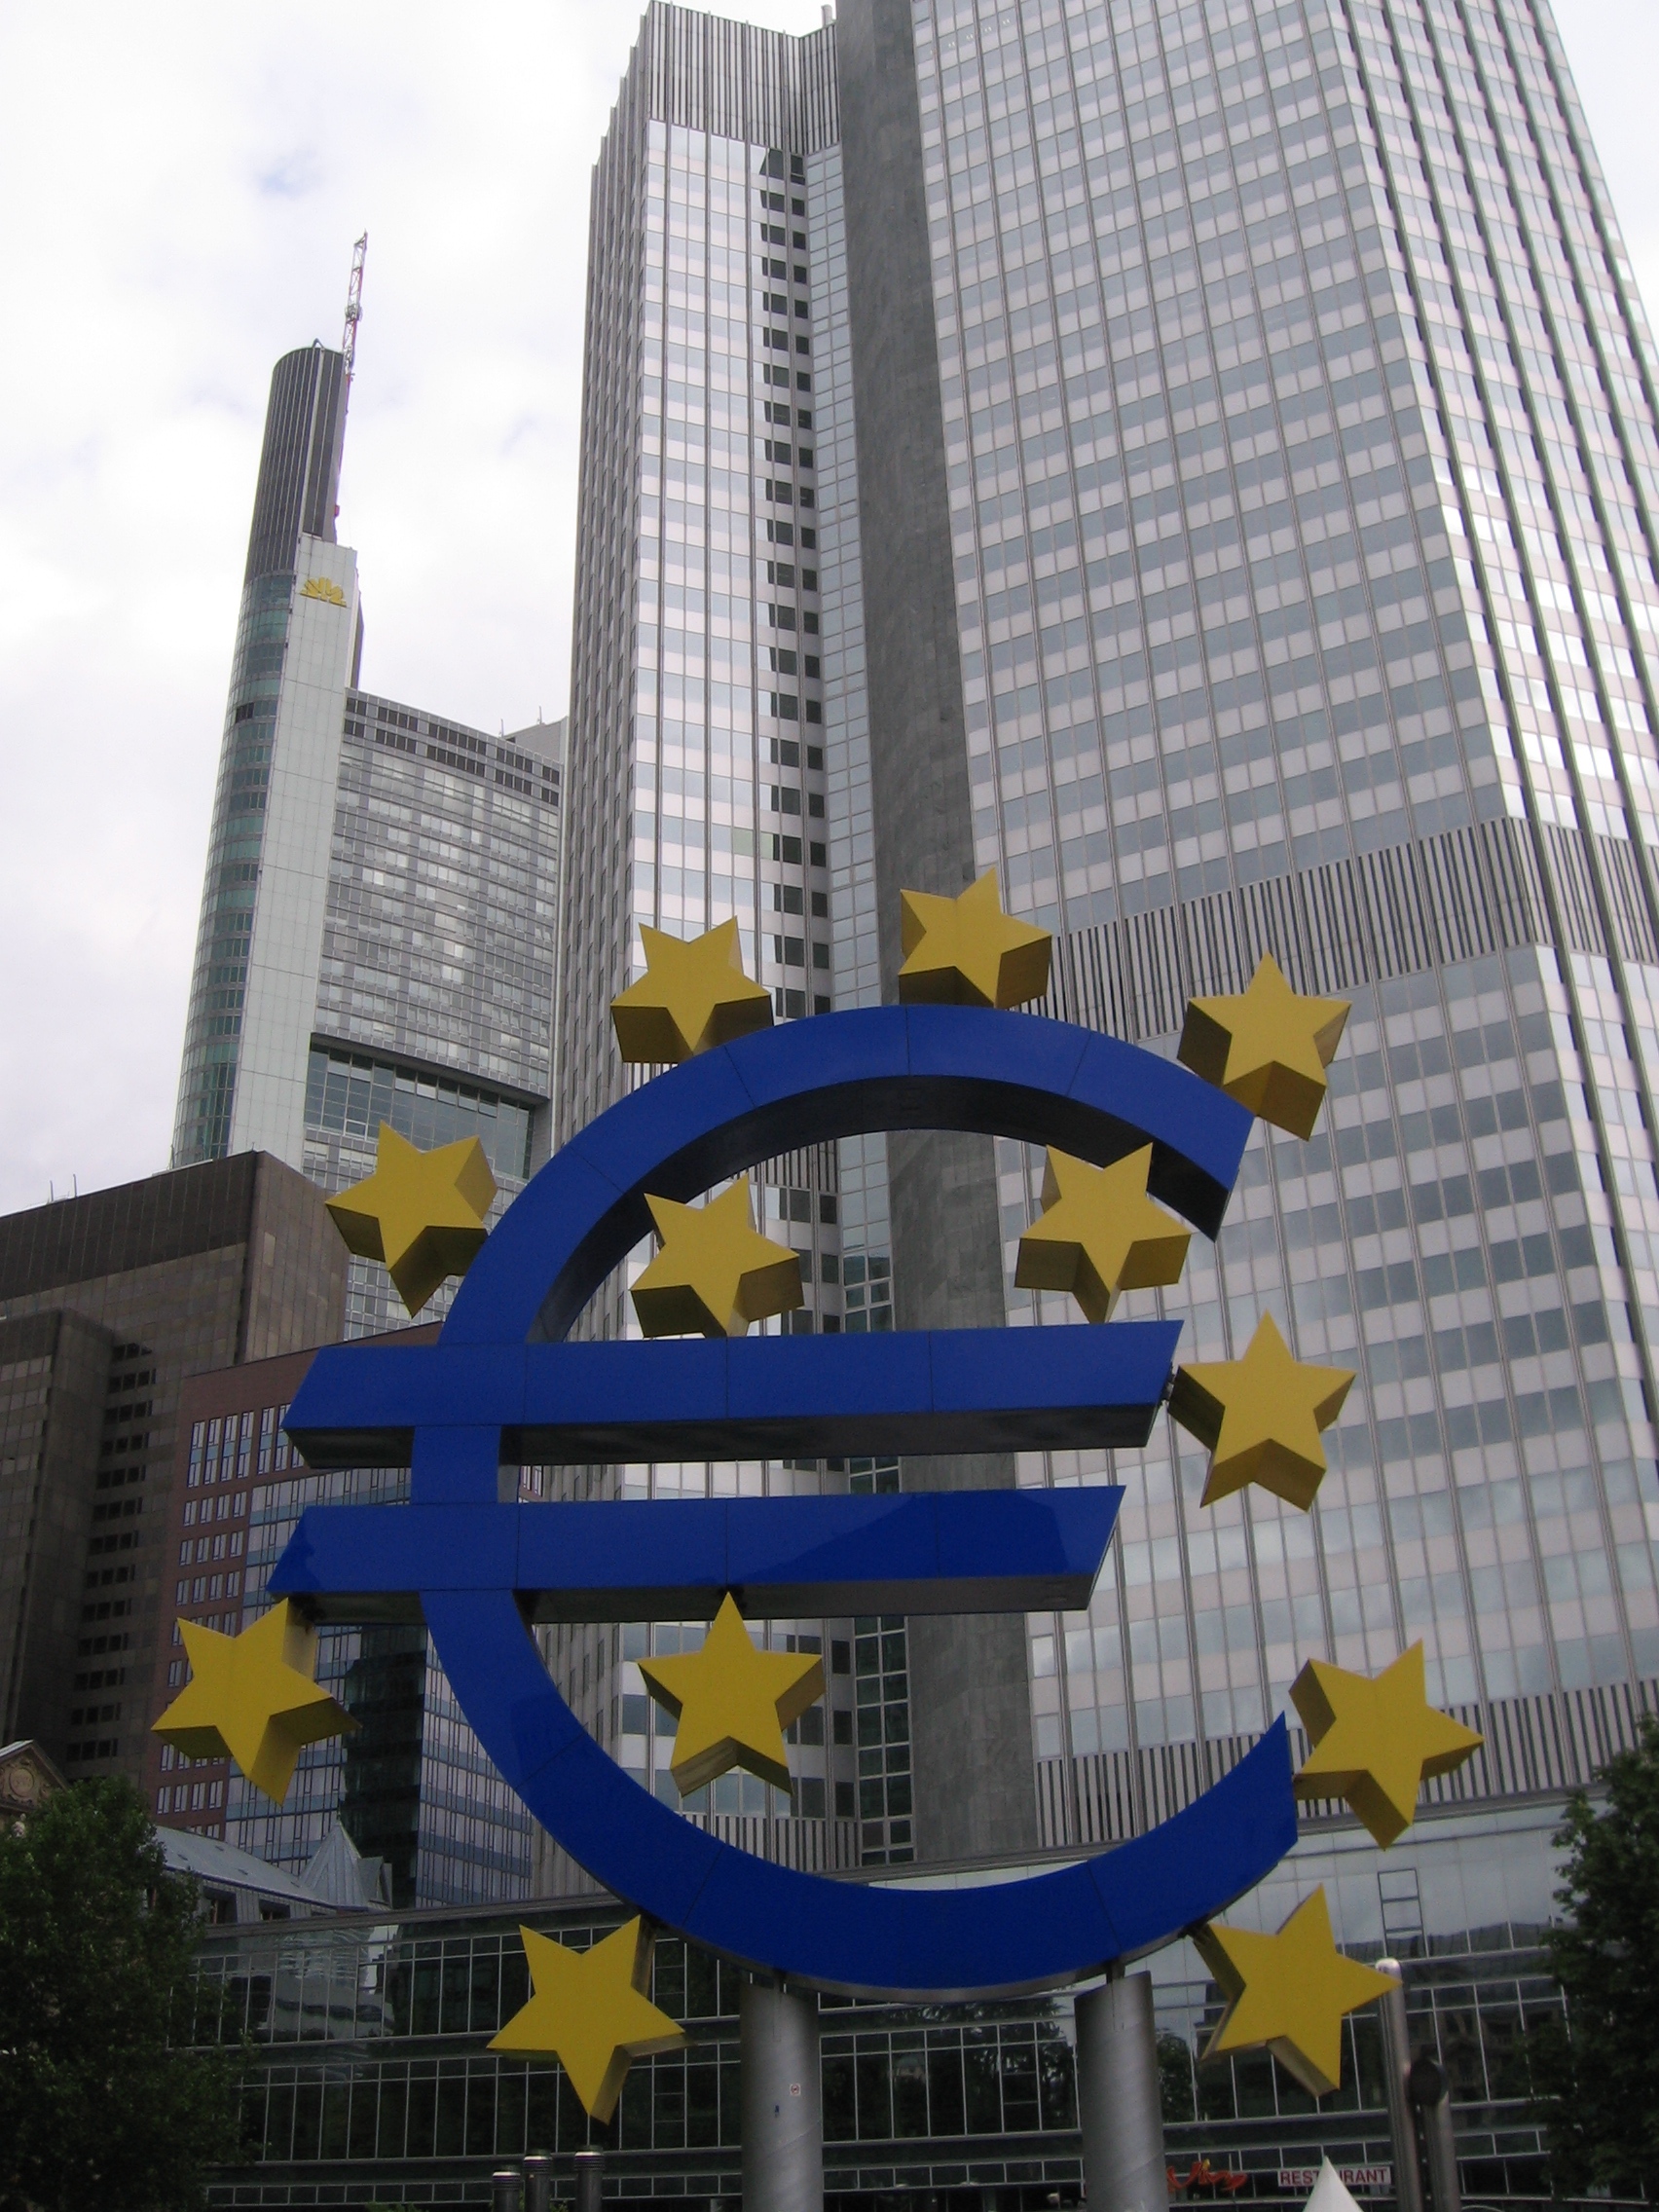 Euroopan keskuspankki